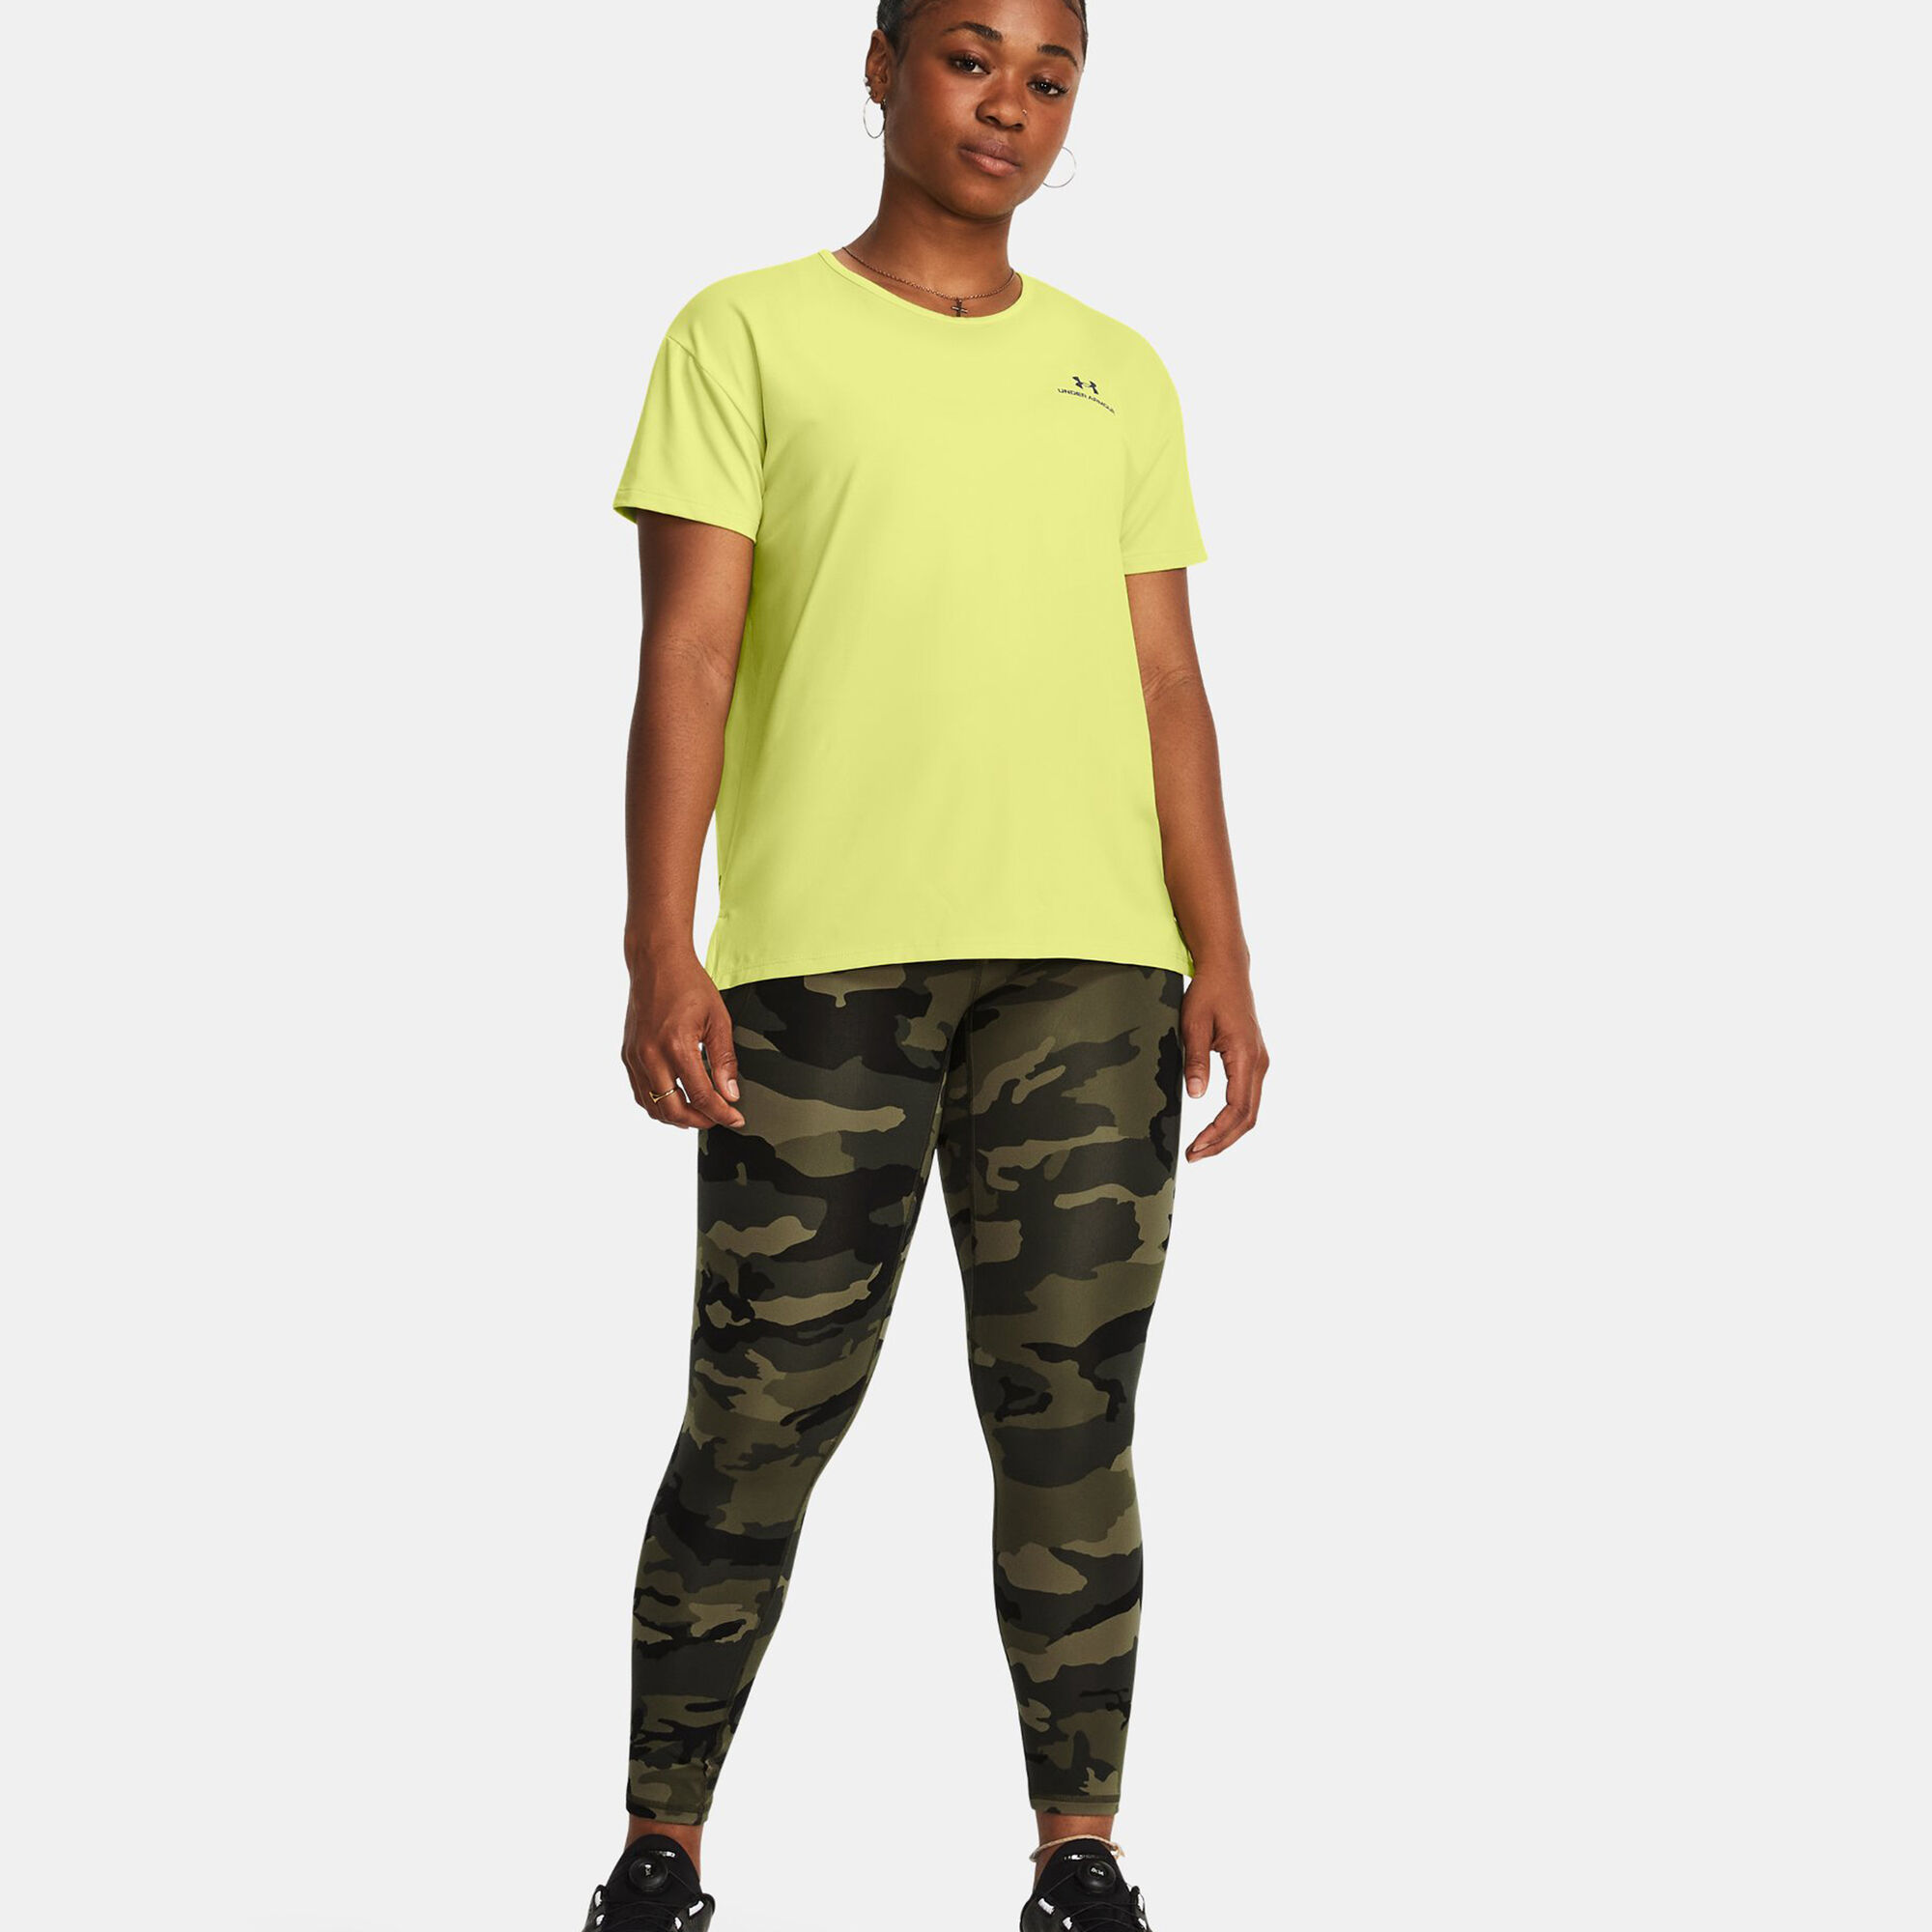 Buy Under Armour Rush Energy 2.0 T-Shirt Women Lime online